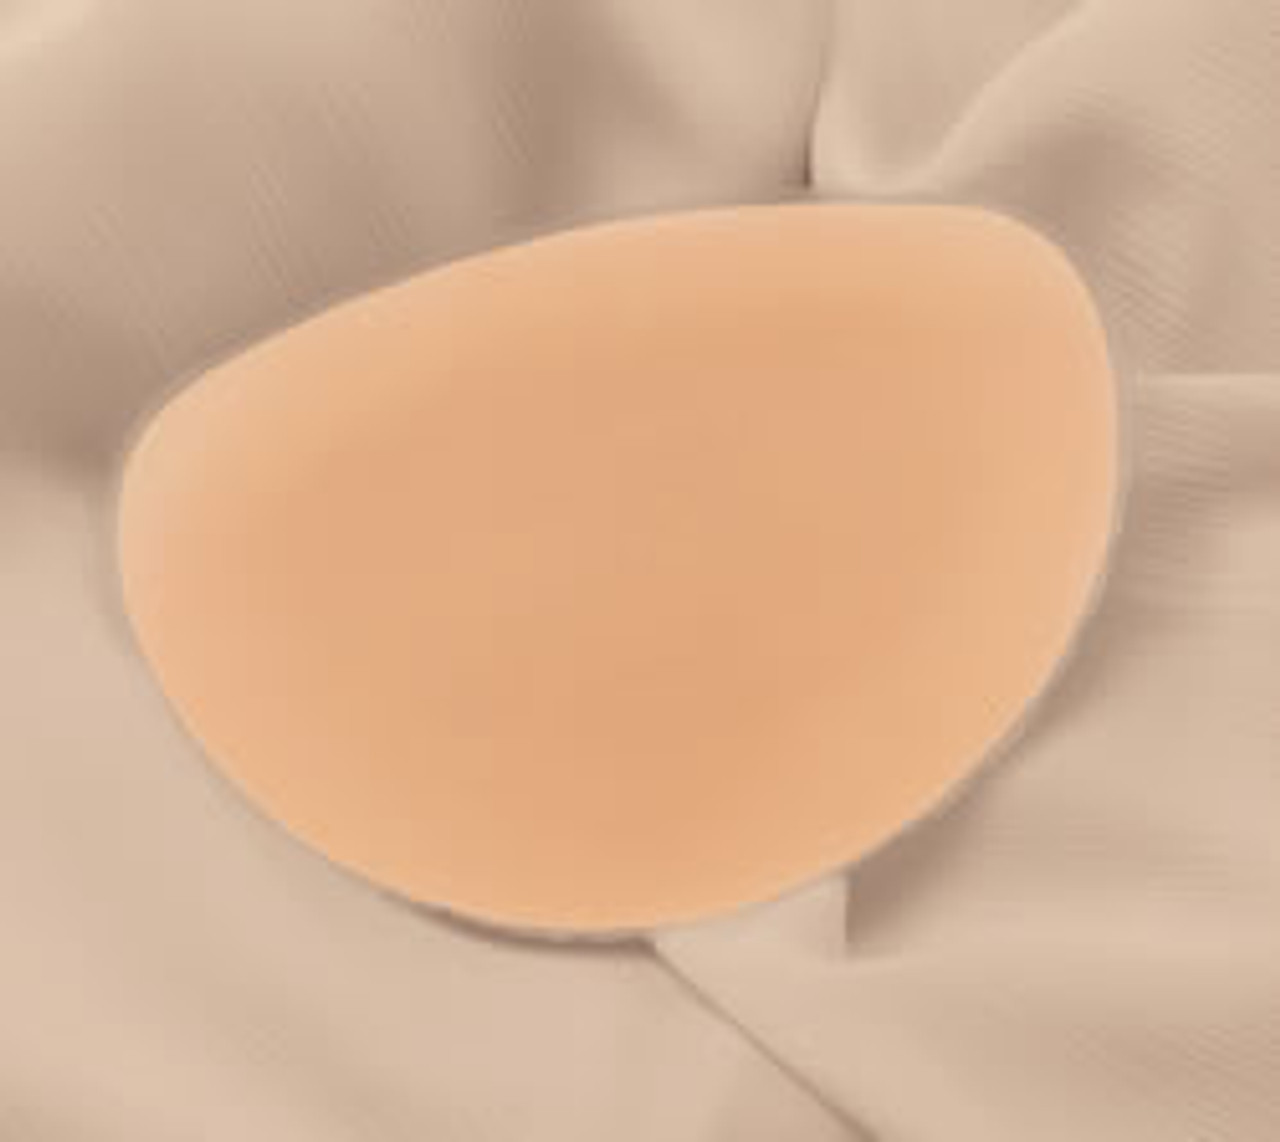 Silicone breast enhancer pads Bra Inserts Elliptical Shaped Breast